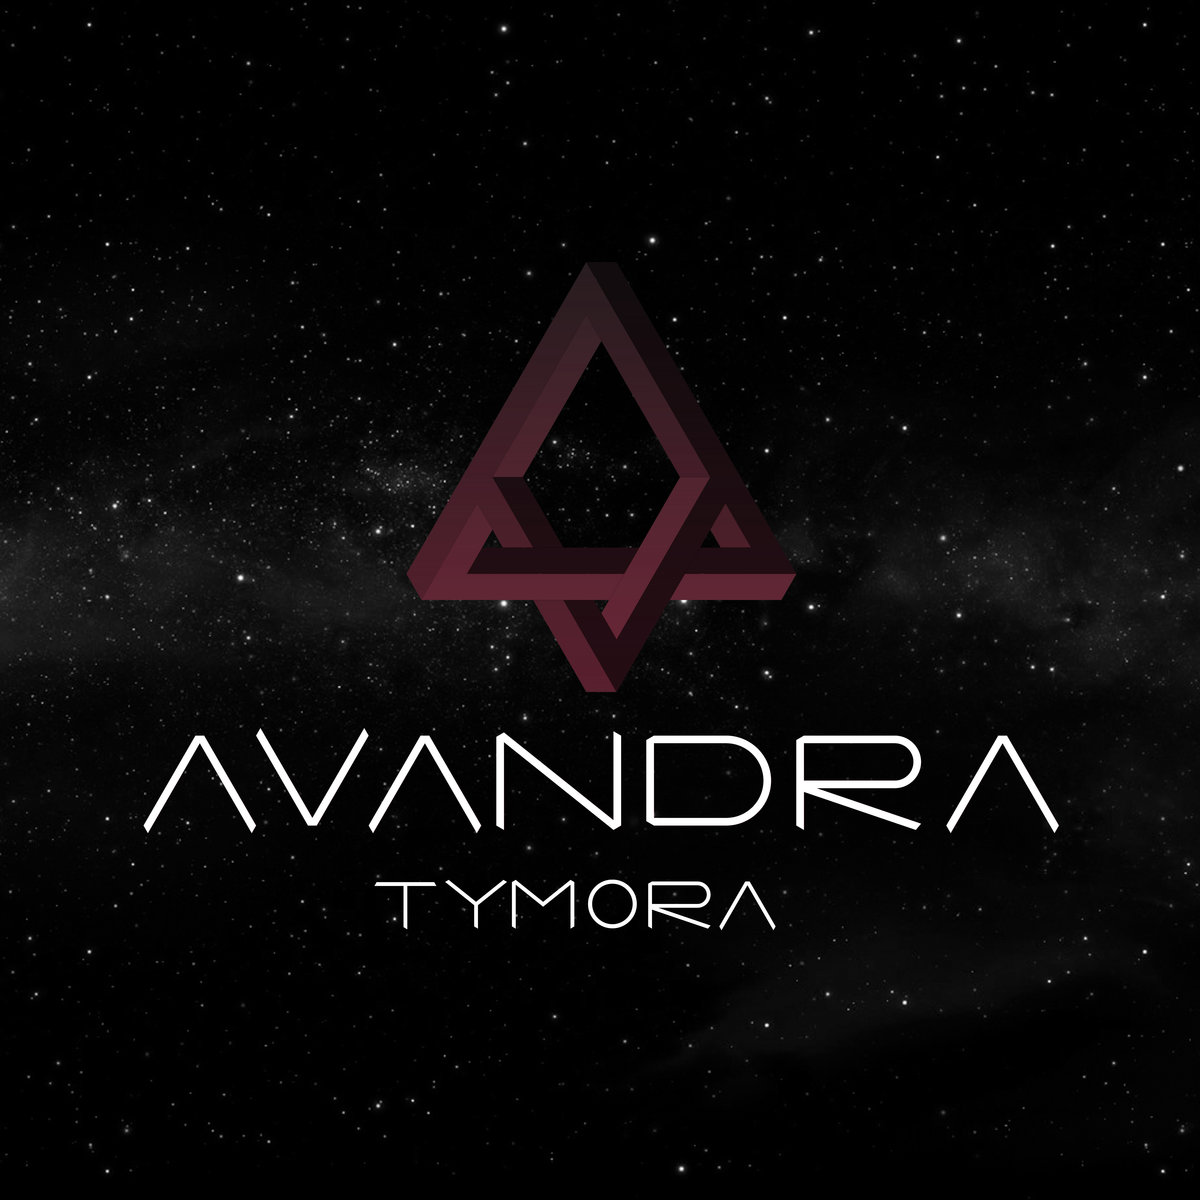 AVANDRA - Tymora cover 